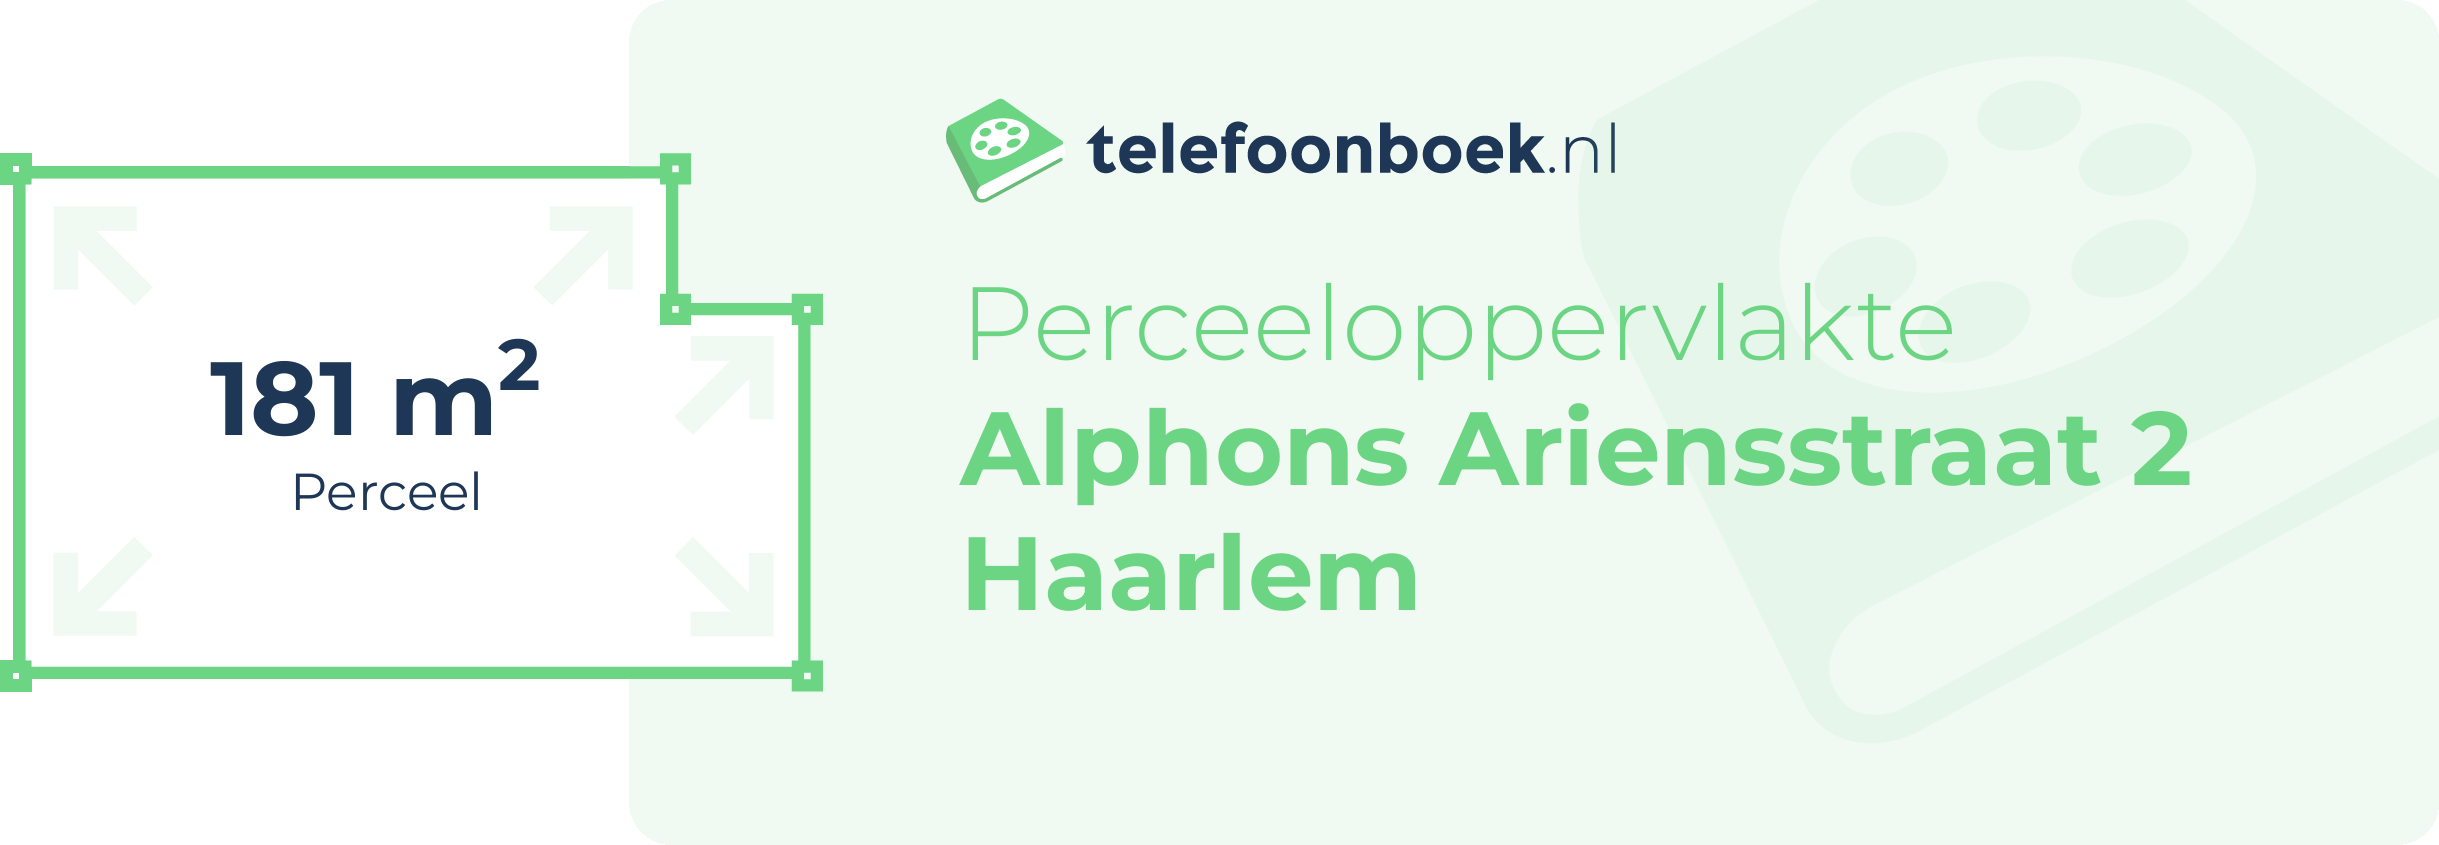 Perceeloppervlakte Alphons Ariensstraat 2 Haarlem